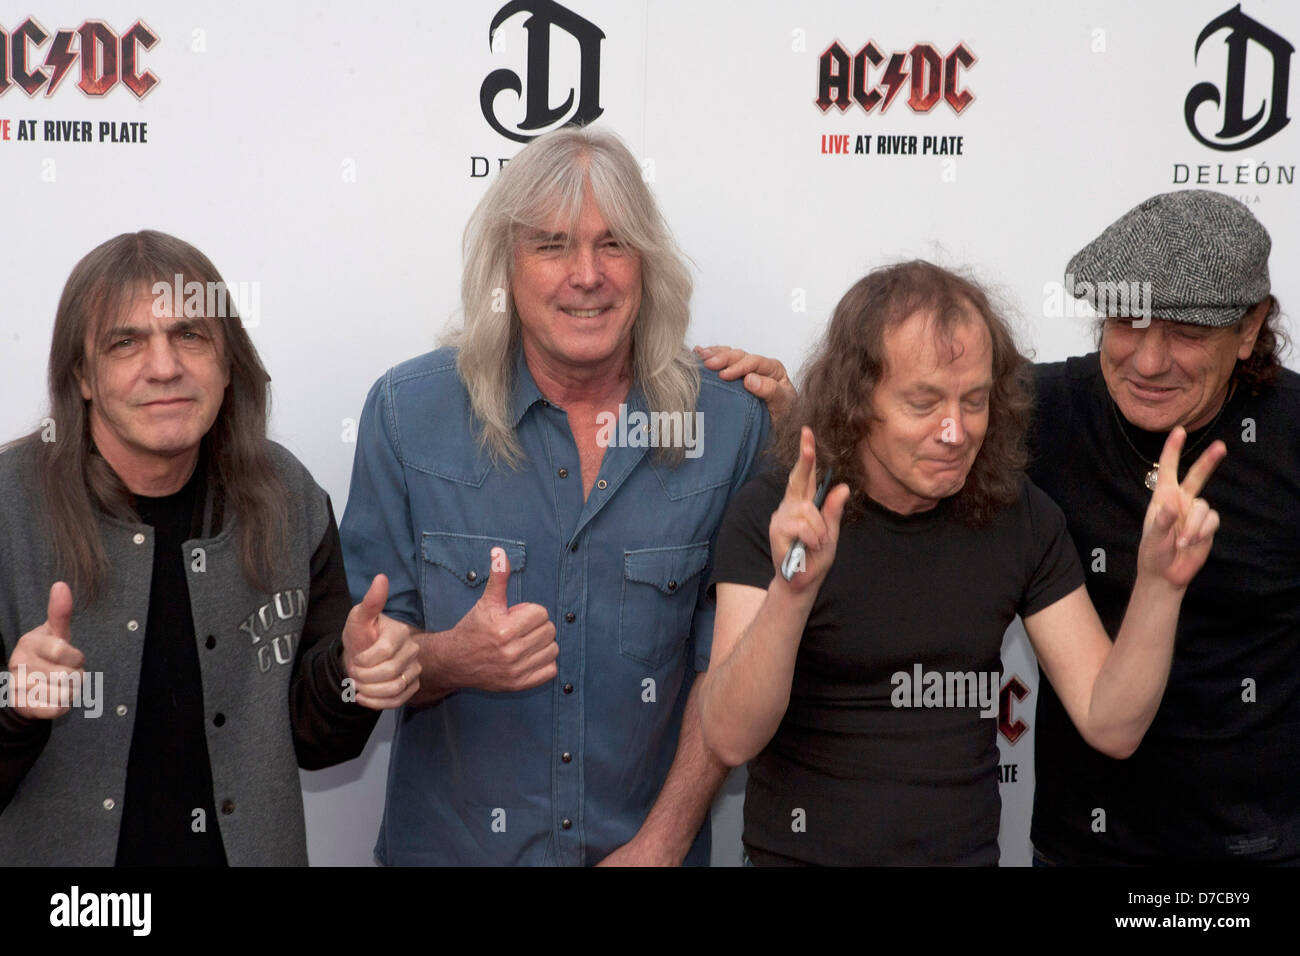 Malcolm Young, Cliff Williams, Angus Young und Brian Johnson von  AC/DC-Premiere von "AC/DC - Live at River Plate" bei Hammersmith  Stockfotografie - Alamy